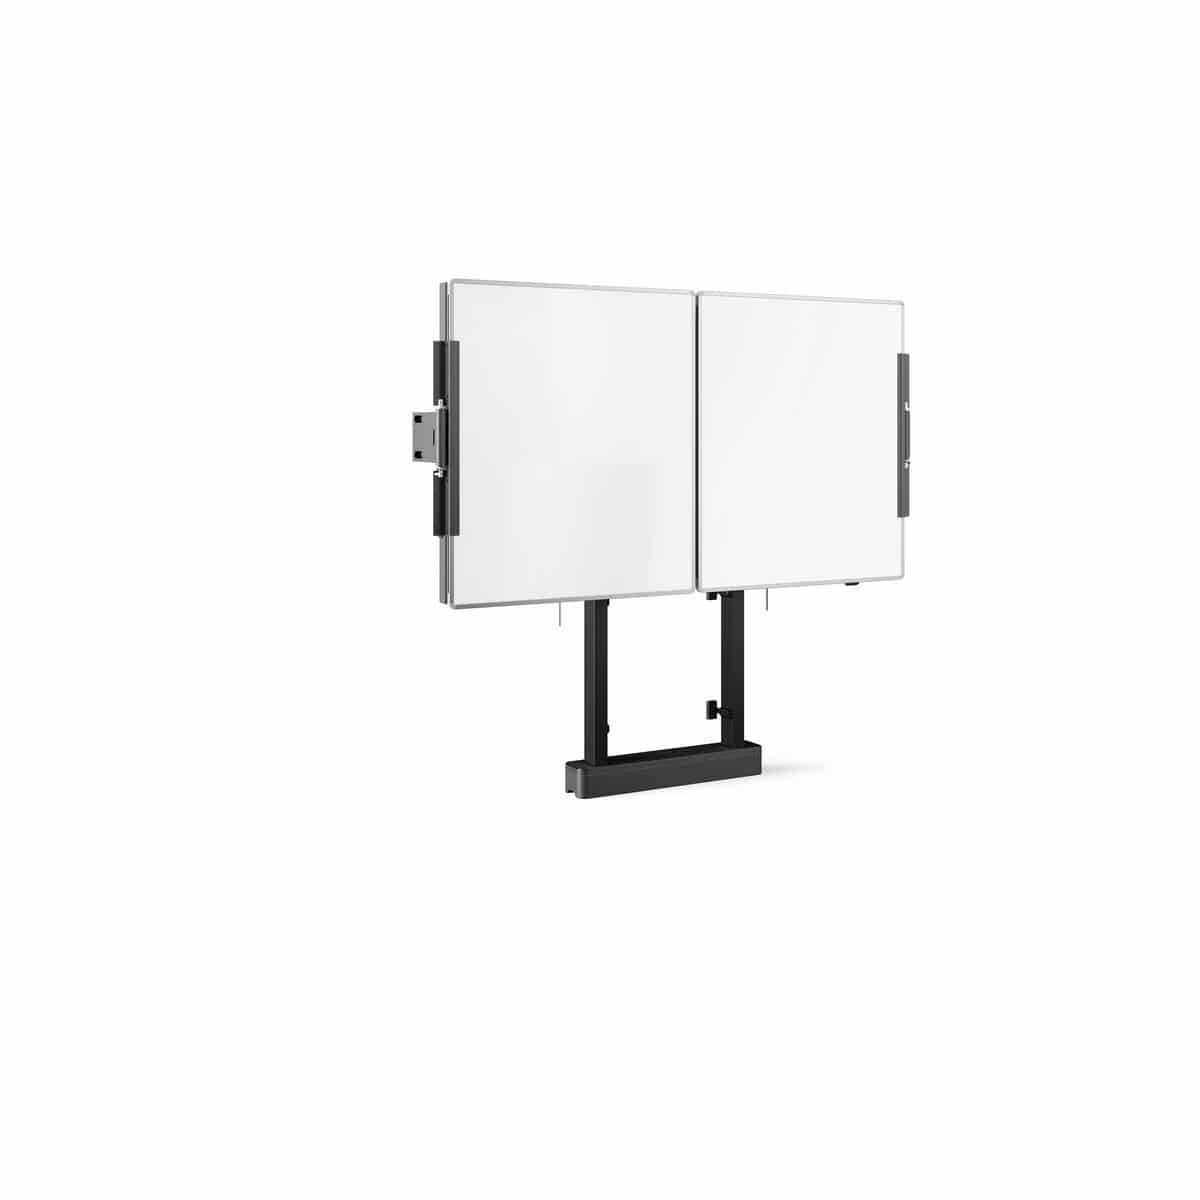 Vogels RISE A218 Whiteboard-Set 86" für motorbetriebenes RISE Display-Liftsystem, Boden-Wand-Lösung